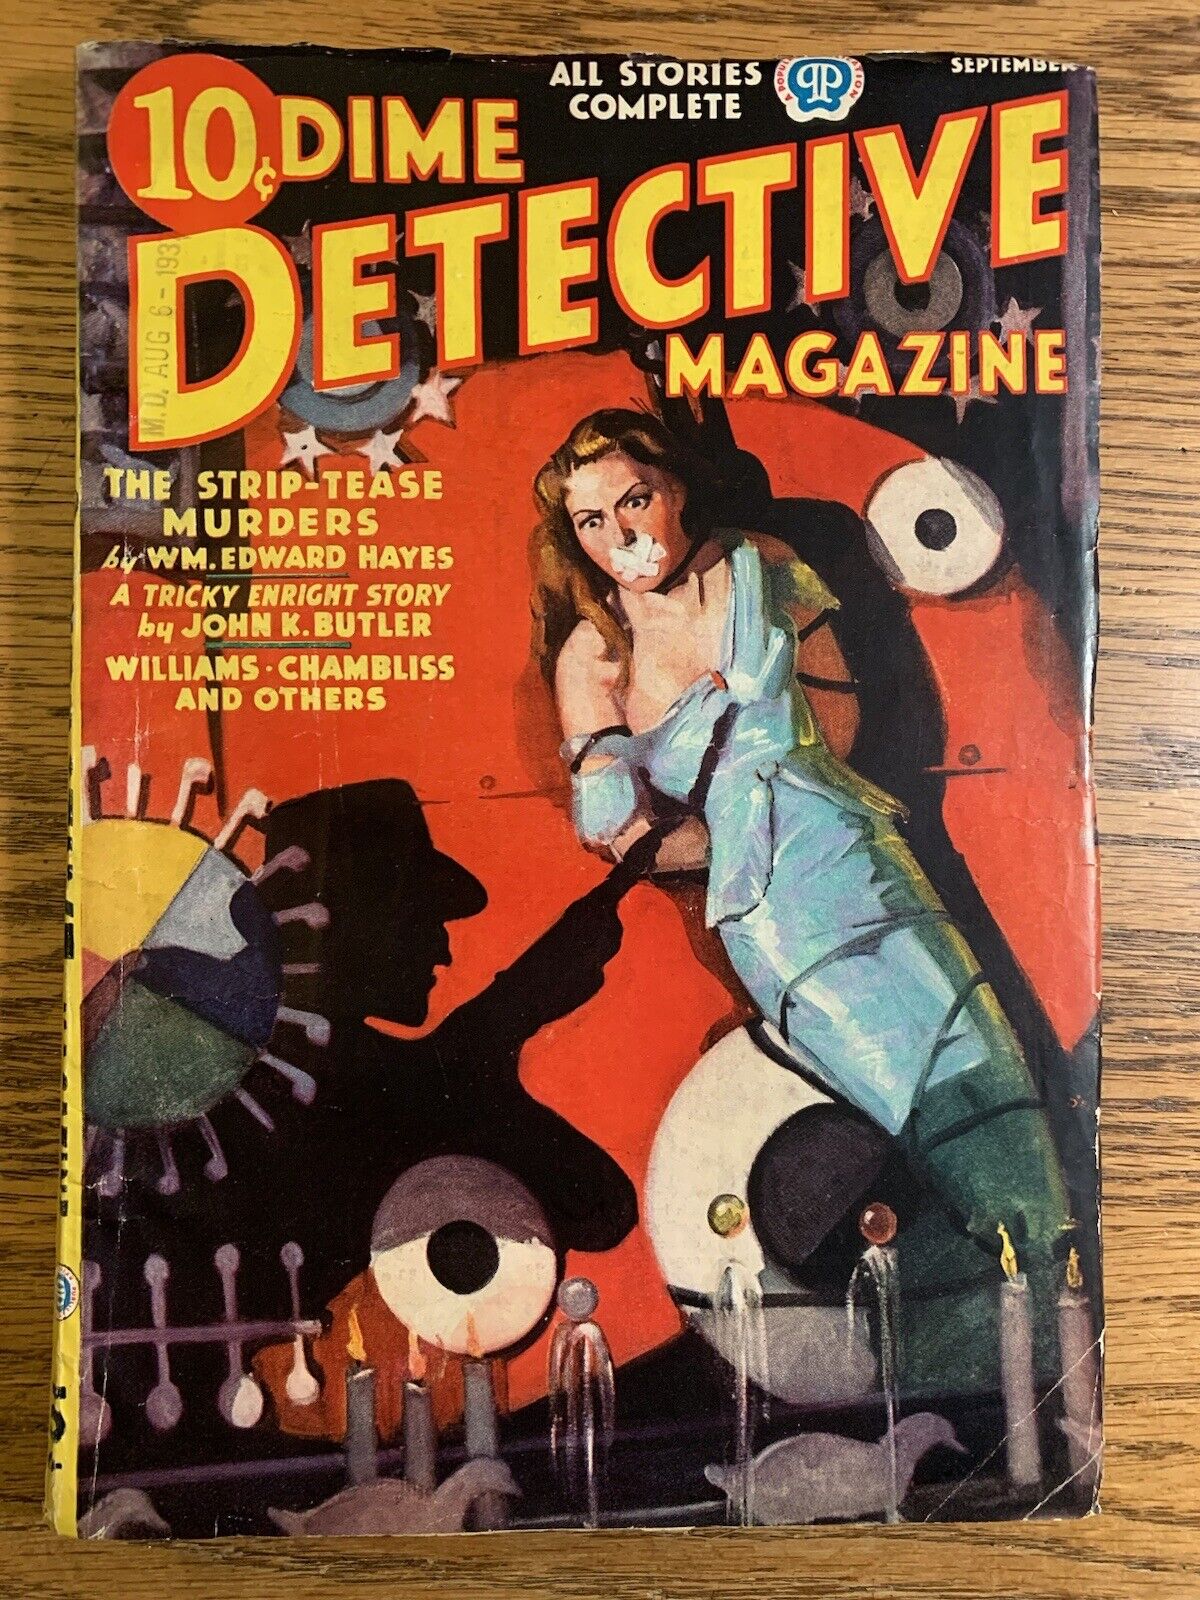 Dime Detective Magazine September 1937 Classic Cover Vintage Pulp Magazine NF